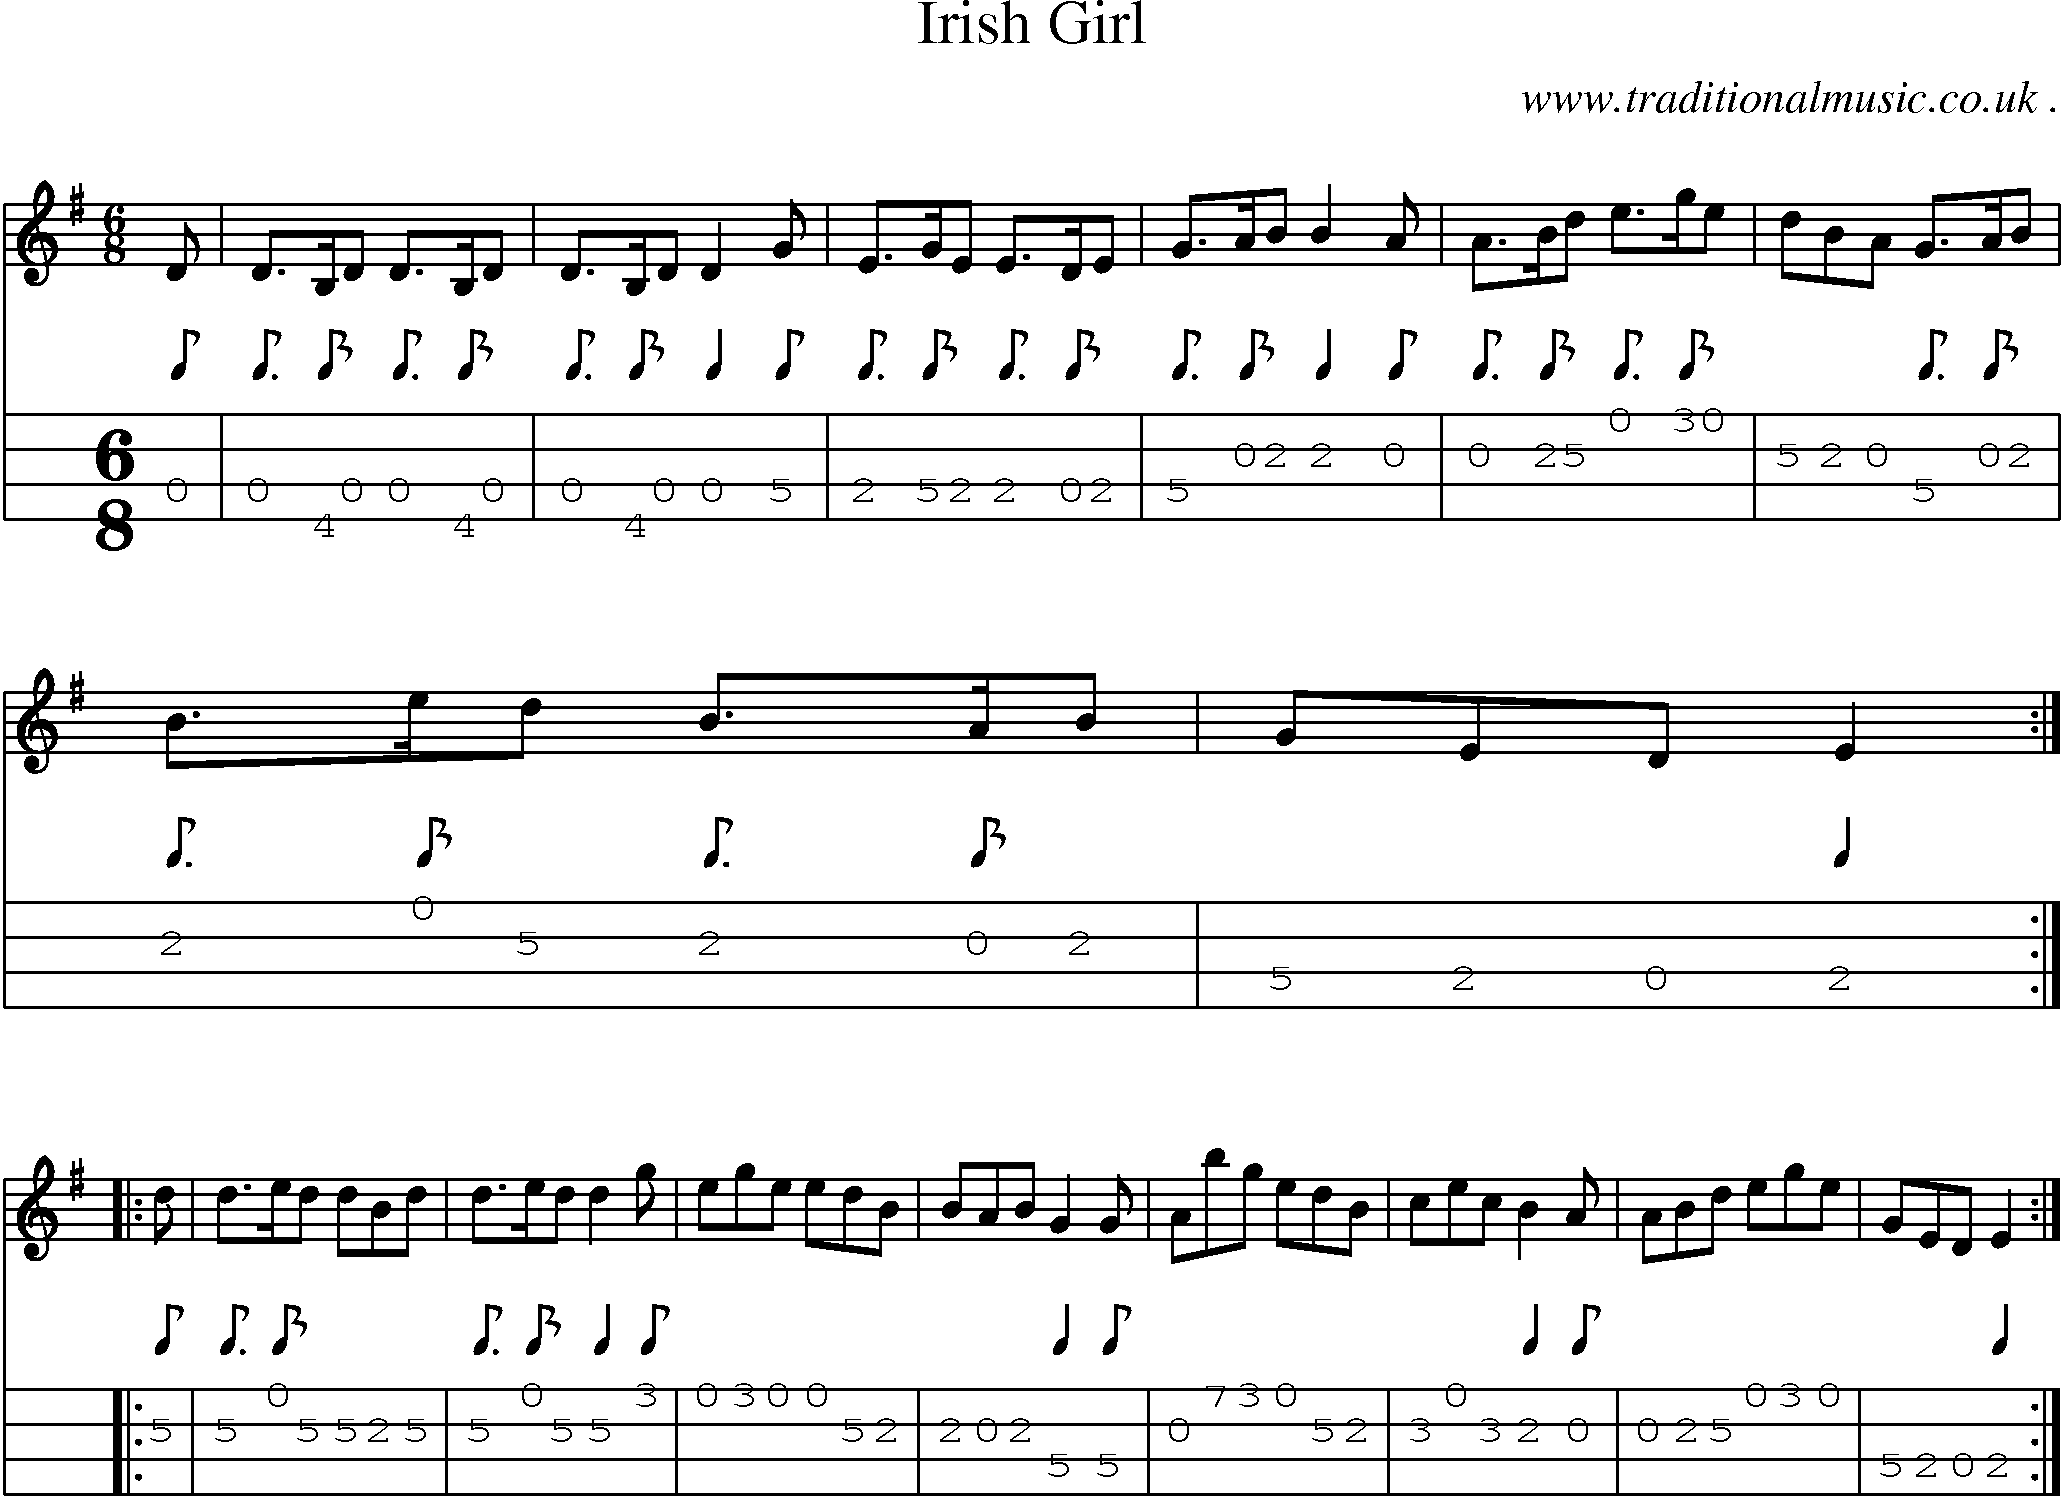 Sheet-music  score, Chords and Mandolin Tabs for Irish Girl